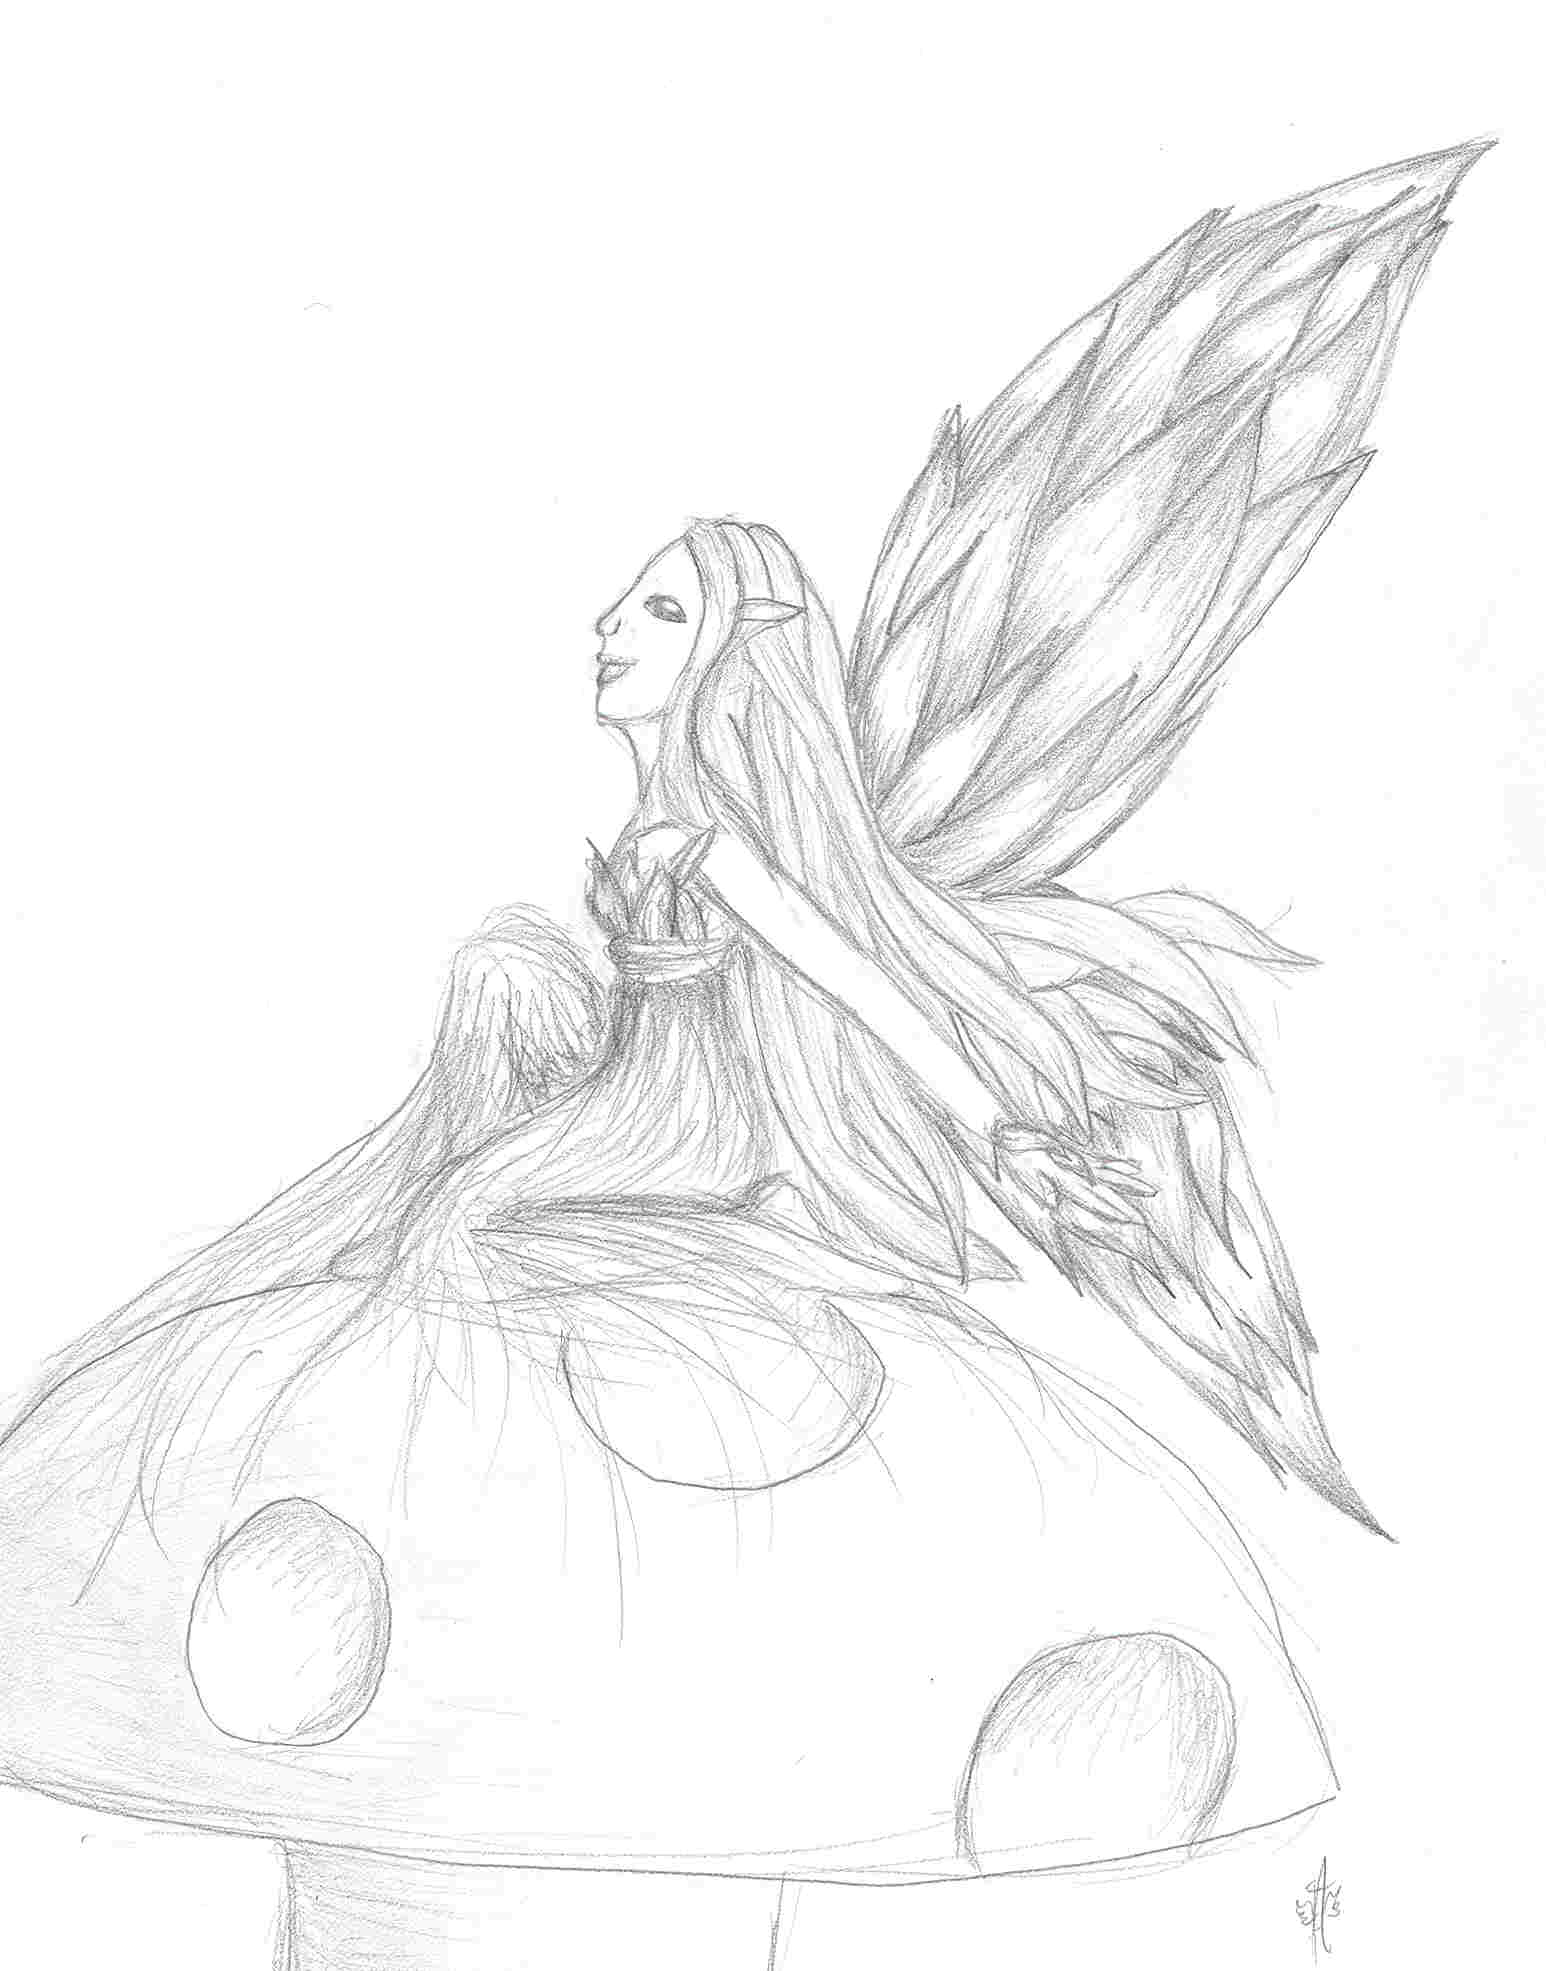 Fairy on a Mushroom by aliasangel